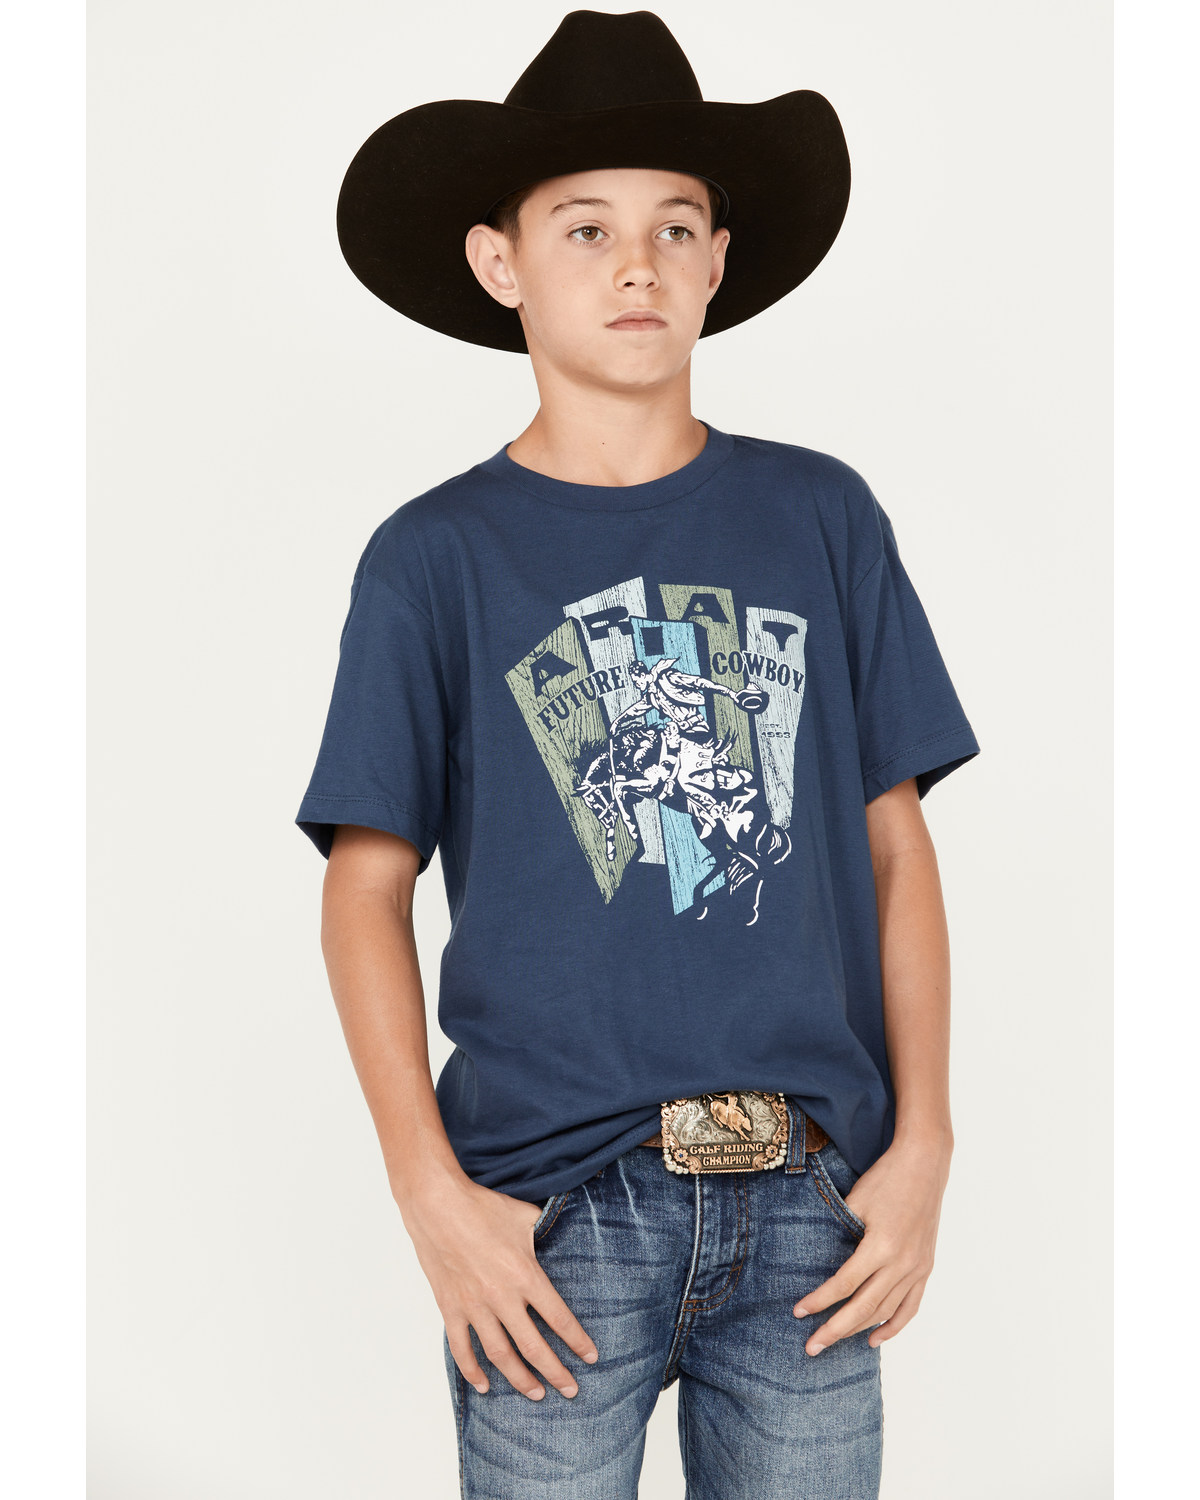 Ariat Boys' Cowboy Plans Short Sleeve Graphic T-Shirt